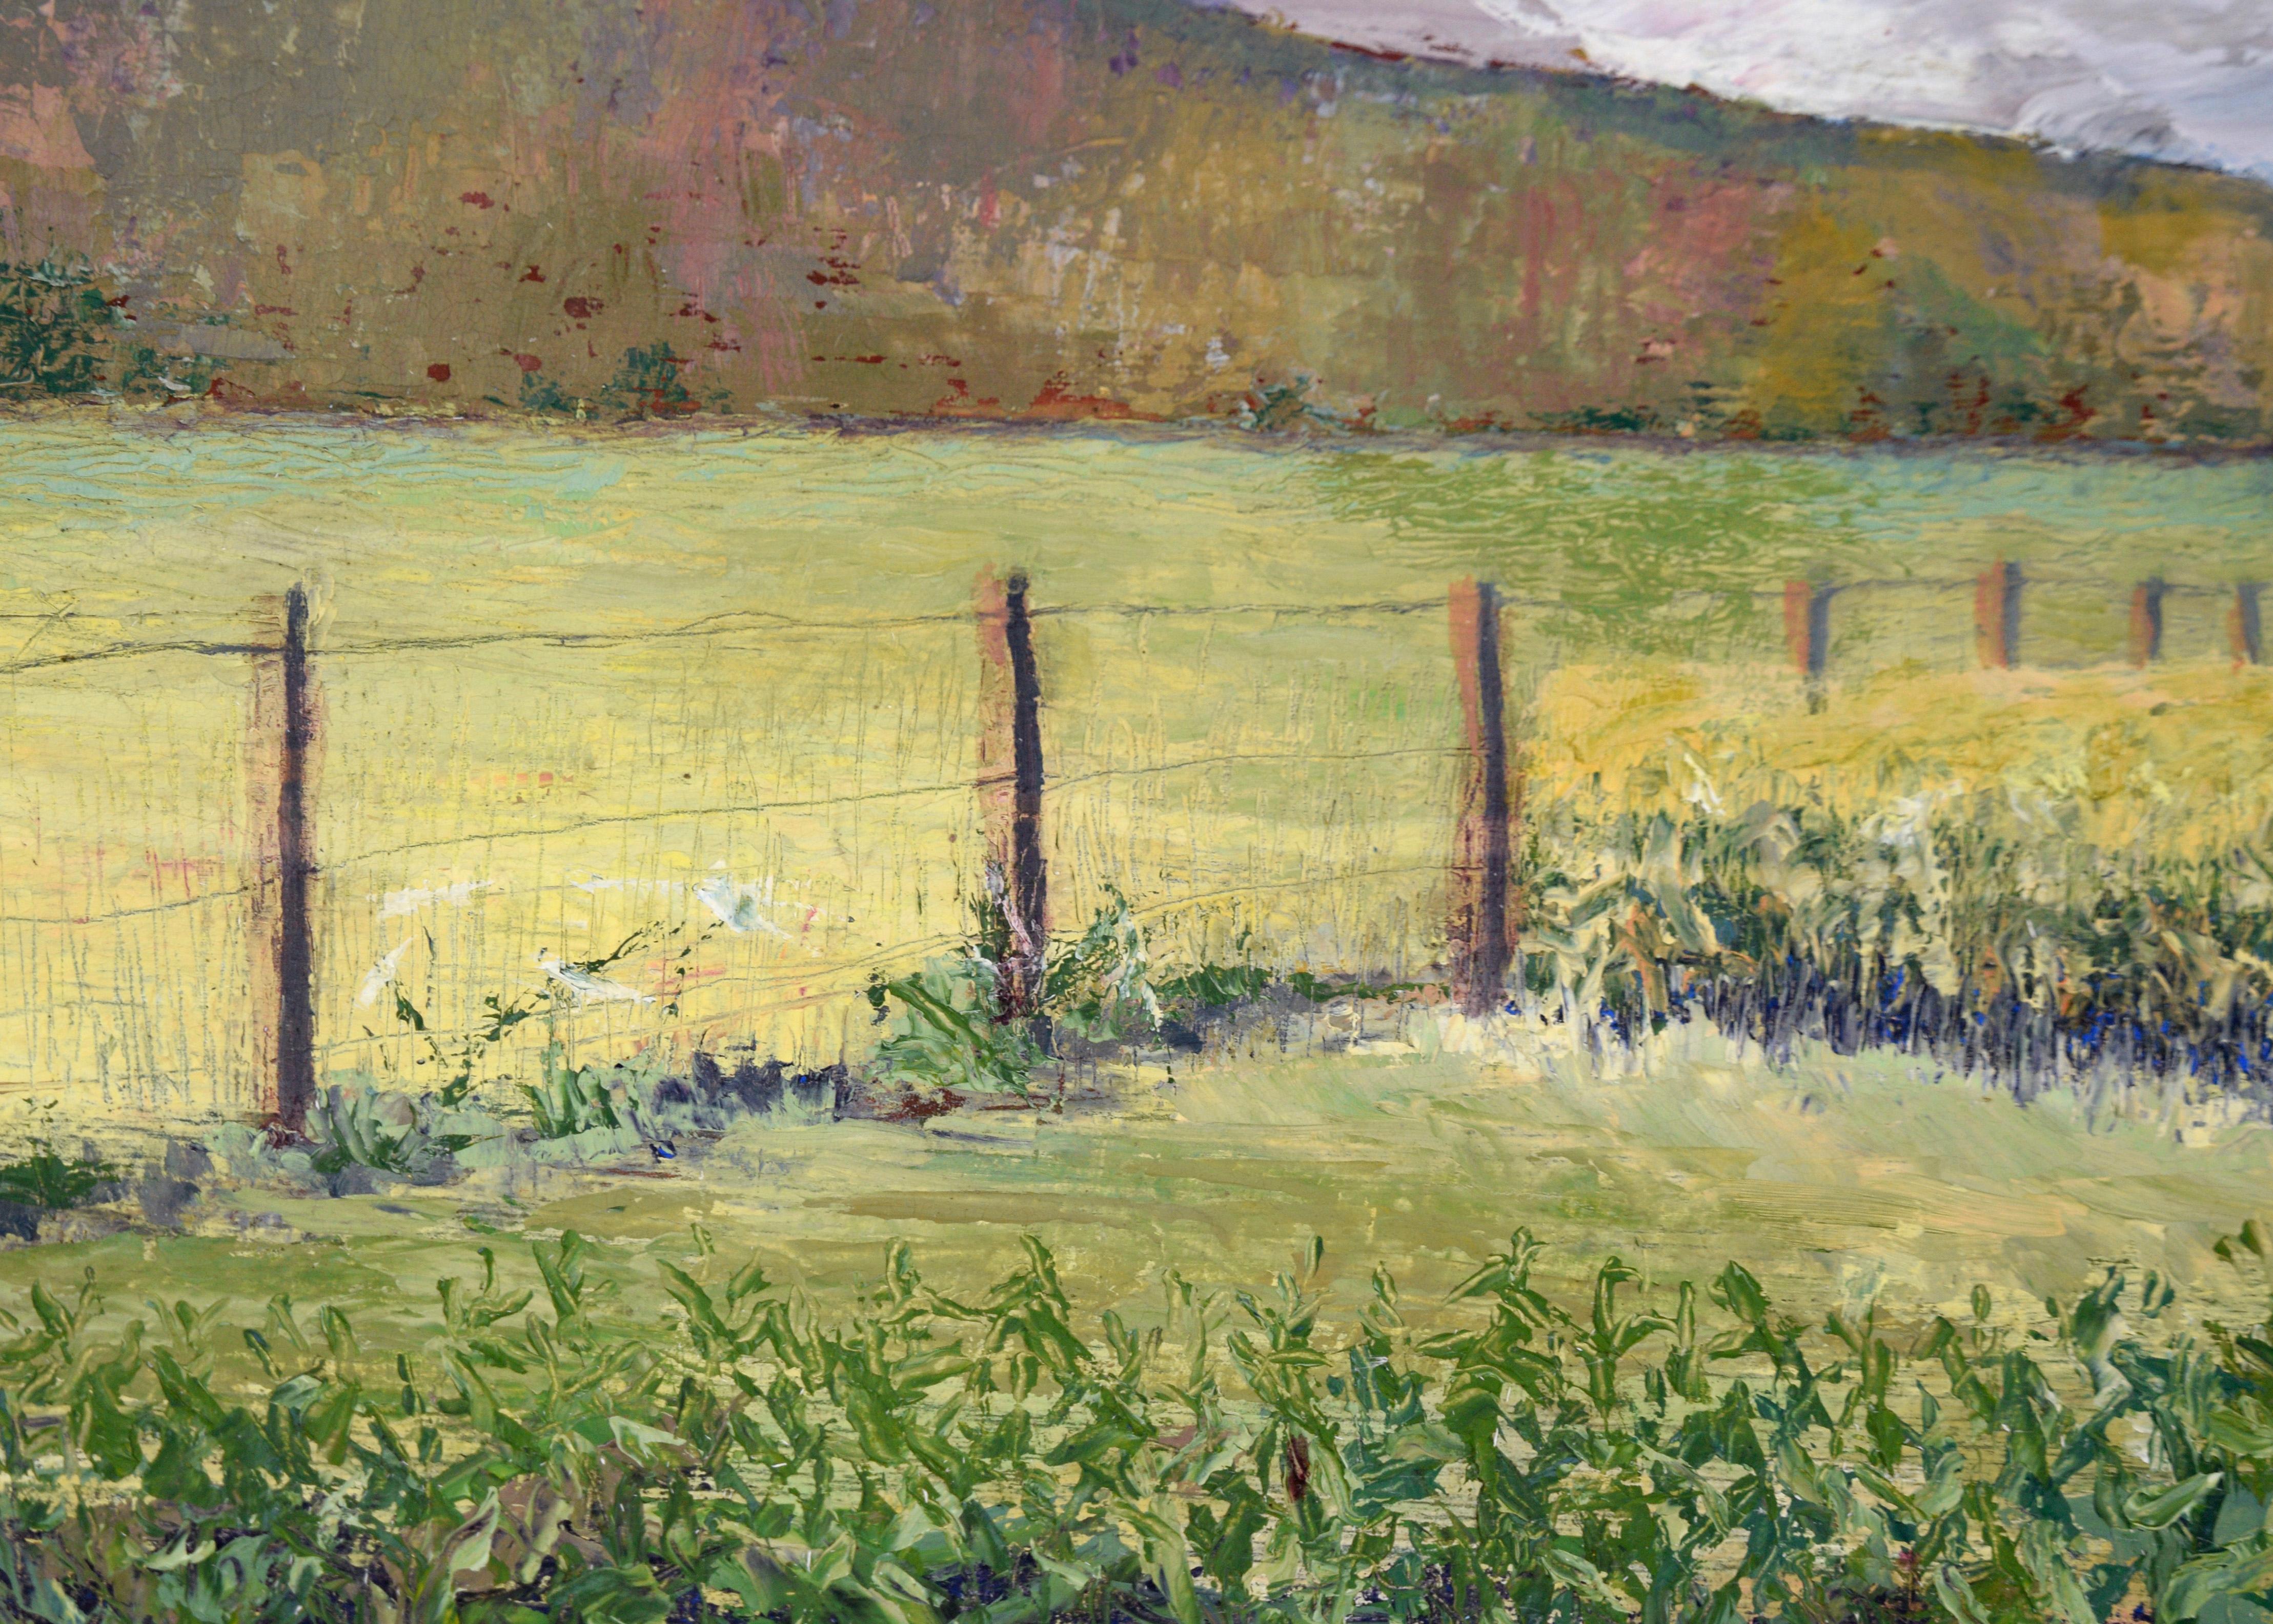 Purple Clouds Above Cornfields on the Farm - Landscape in Oil on Masonite For Sale 3